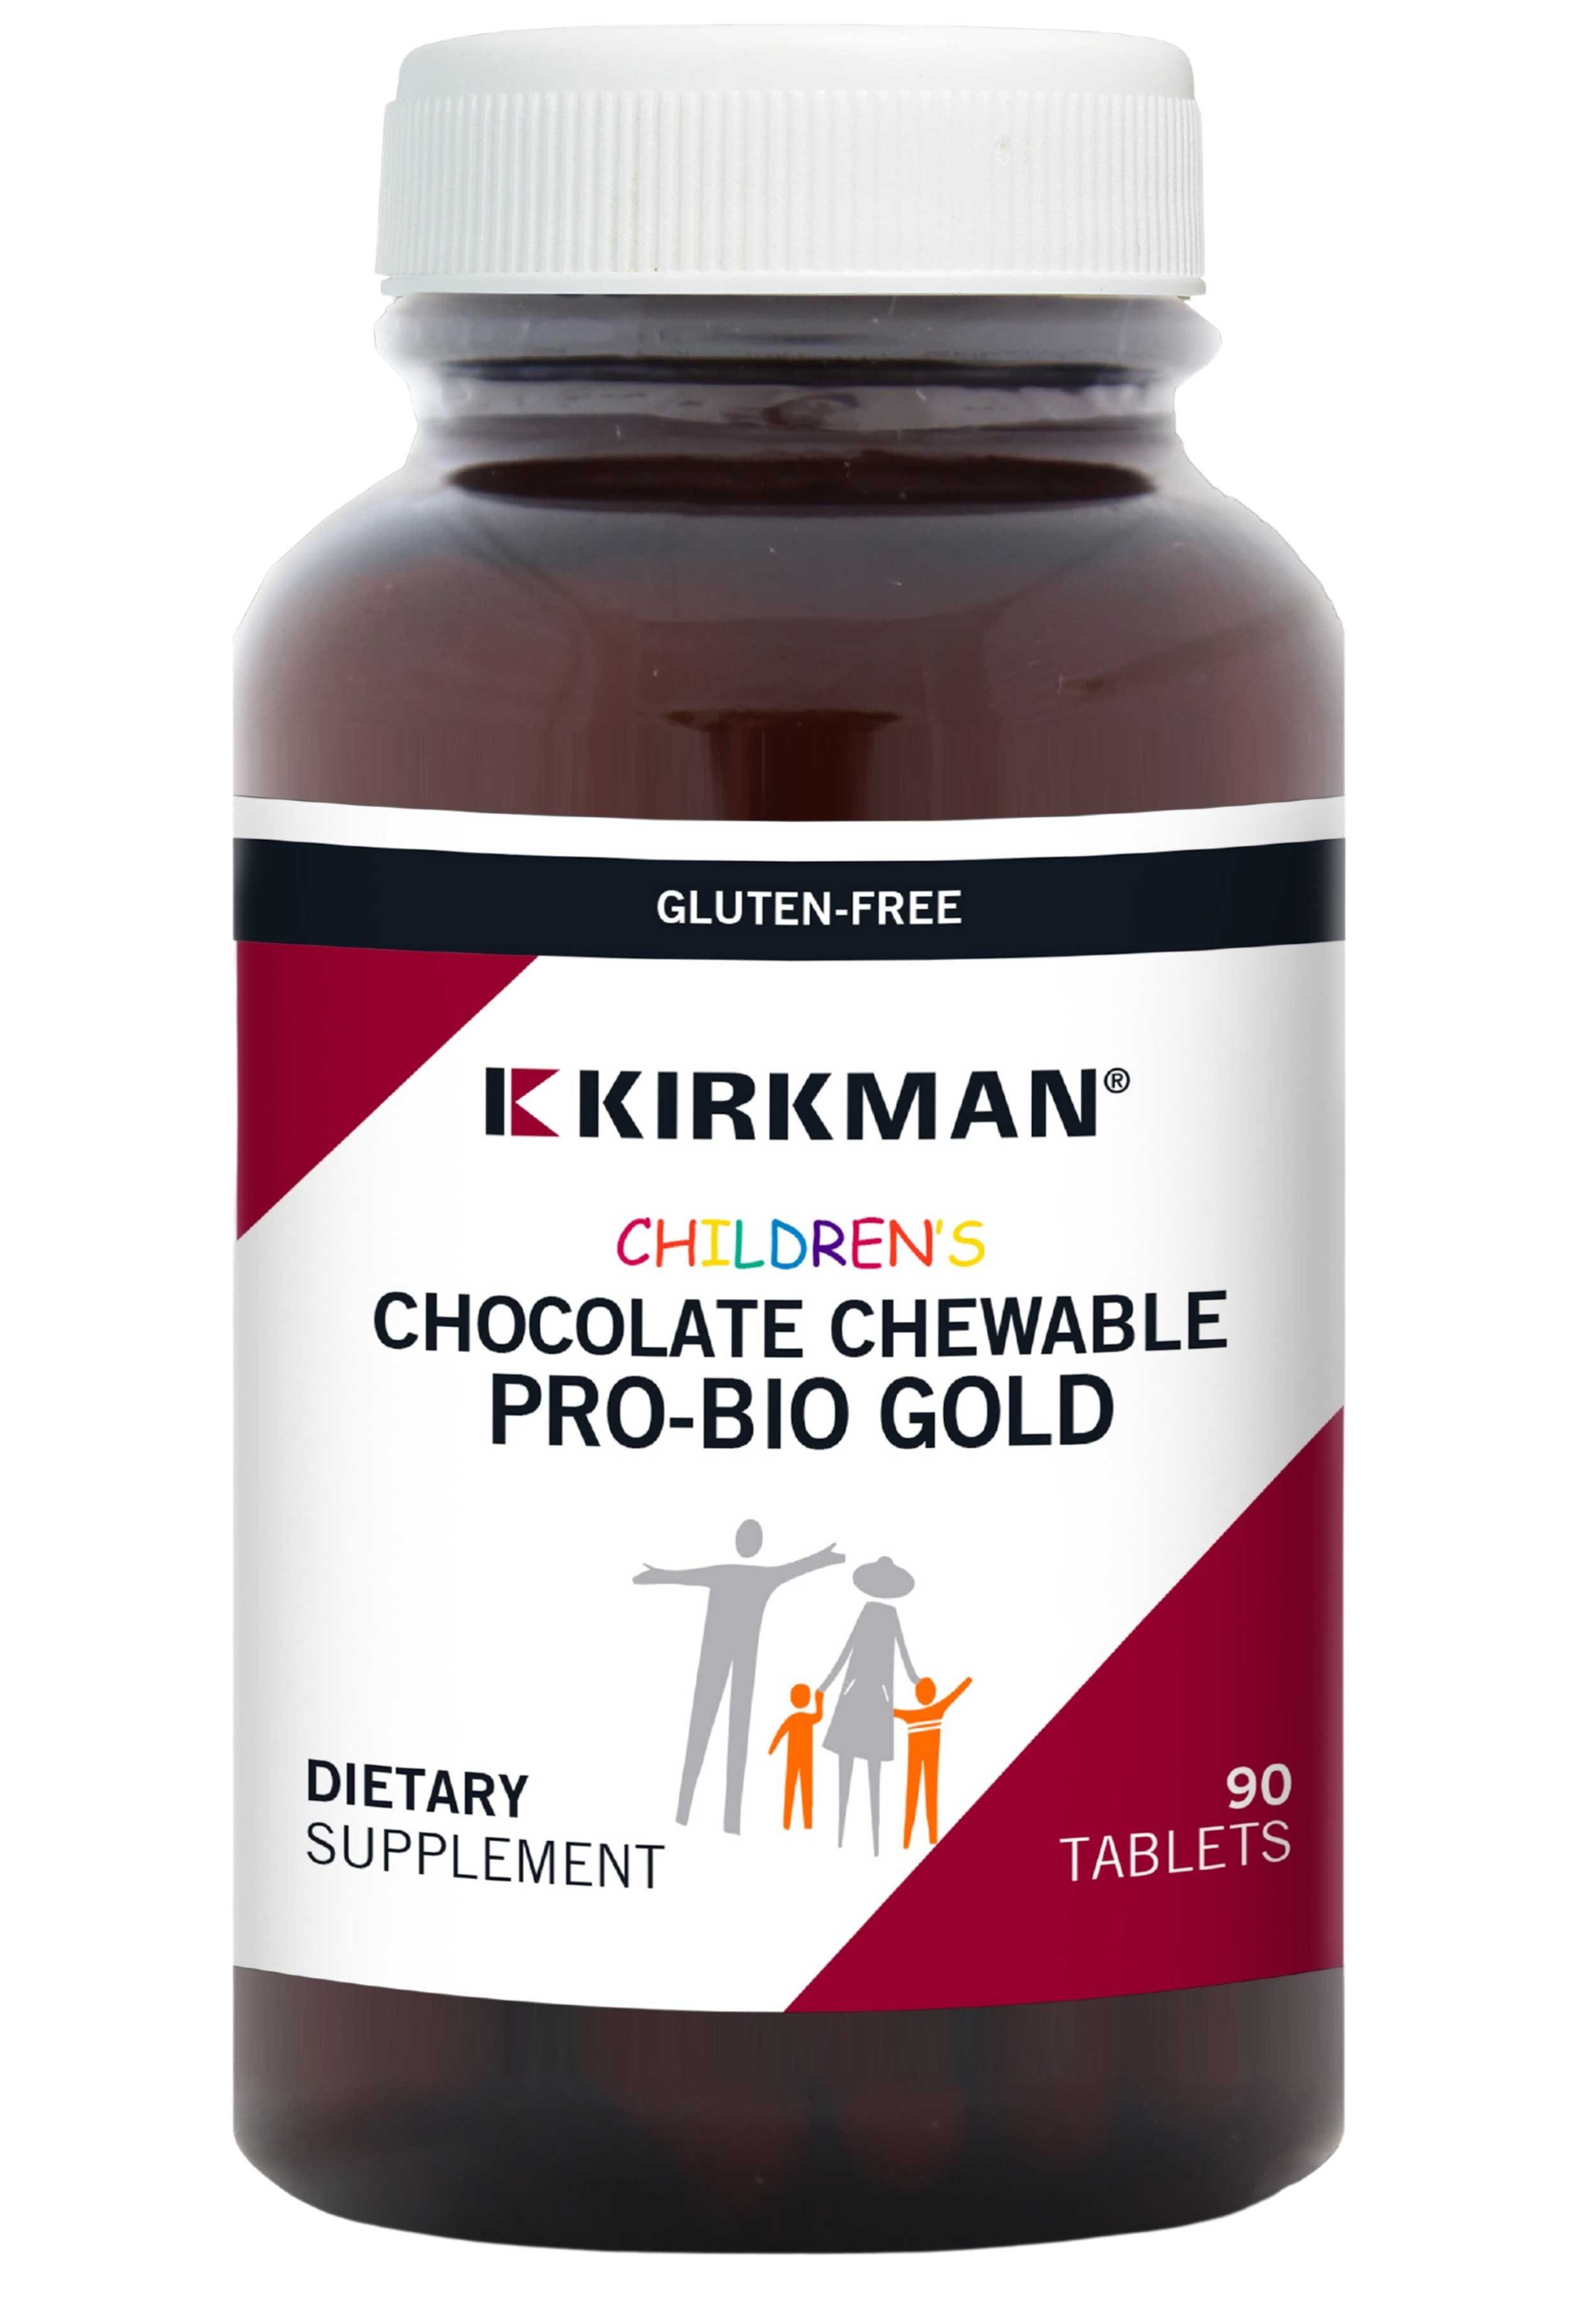 Kirkman Children's Chocolate Chewable Pro-Bio Gold